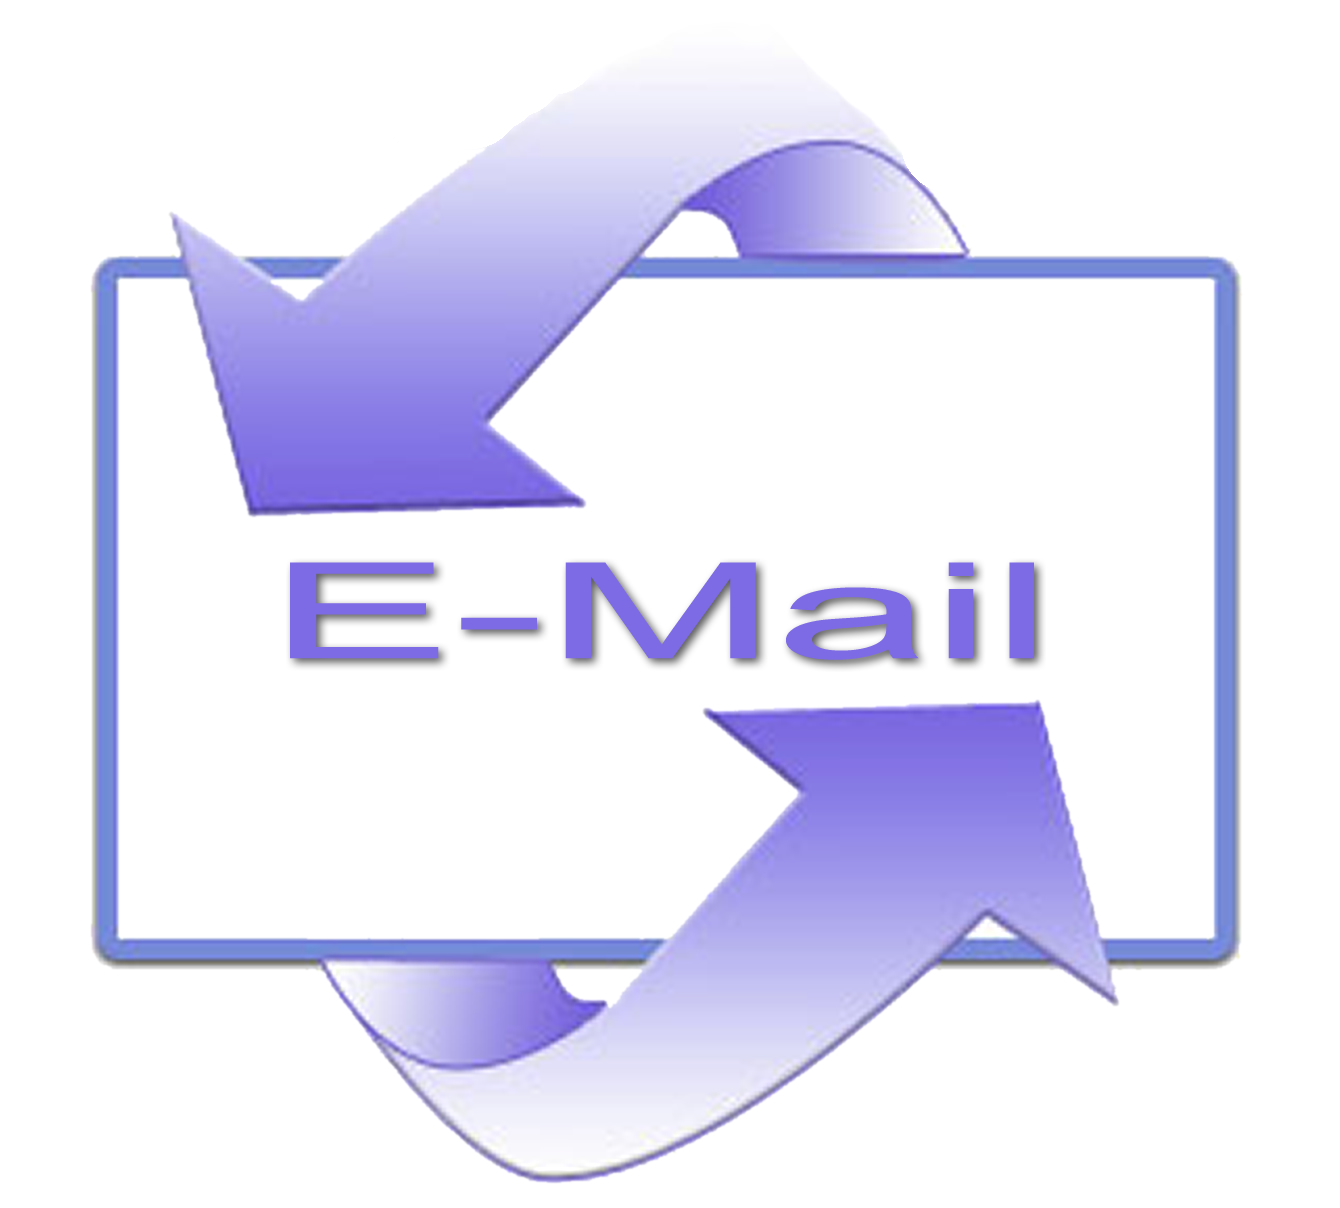 email_logo.jpg - 212.56 KB